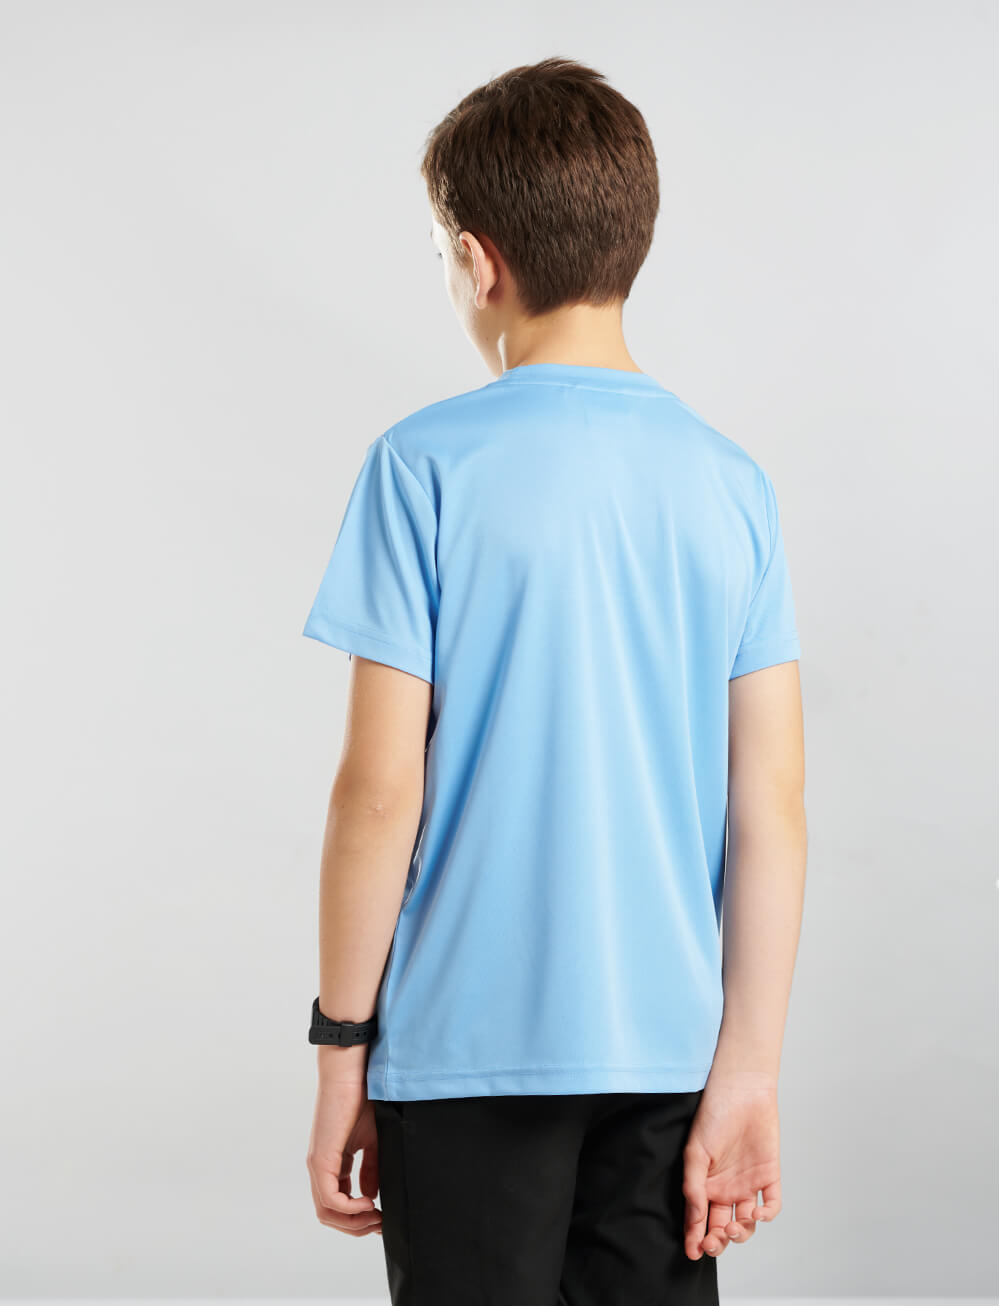 Official Manchester City Kids Stripe T-Shirt - Sky Blue - The World Football Store